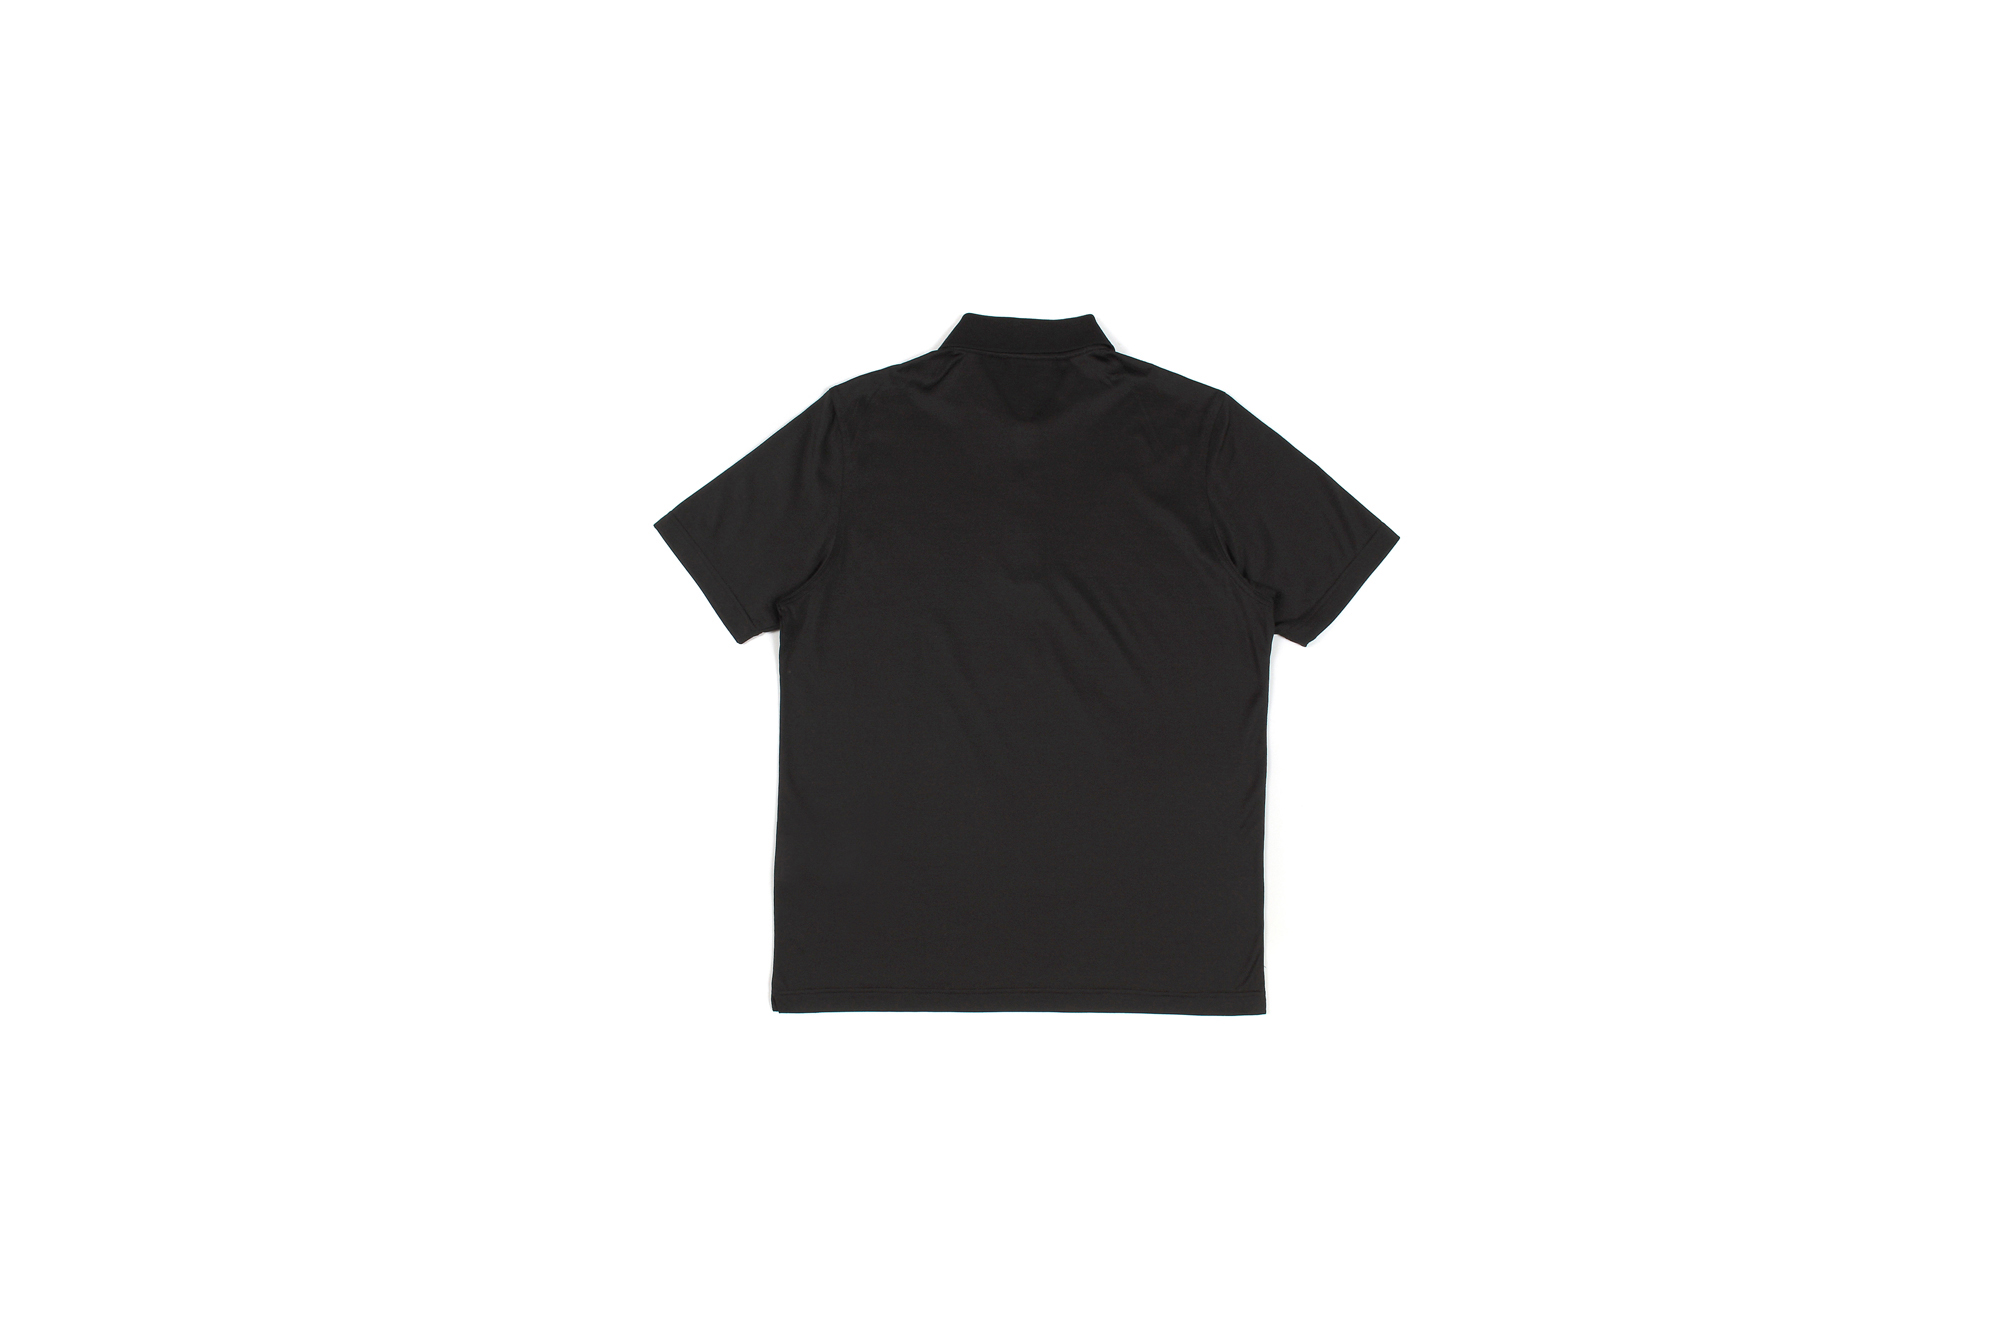 Gran Sasso (グランサッソ) Silk Polo Shirt (シルクポロシャツ) SETA (シルク 100%) シルク ポロシャツ BLACK (ブラック・303) made in italy (イタリア製) 2022 春夏新作 【入荷しました】【フリー分発売開始】愛知 名古屋 Alto e Diritto altoediritto アルトエデリット 